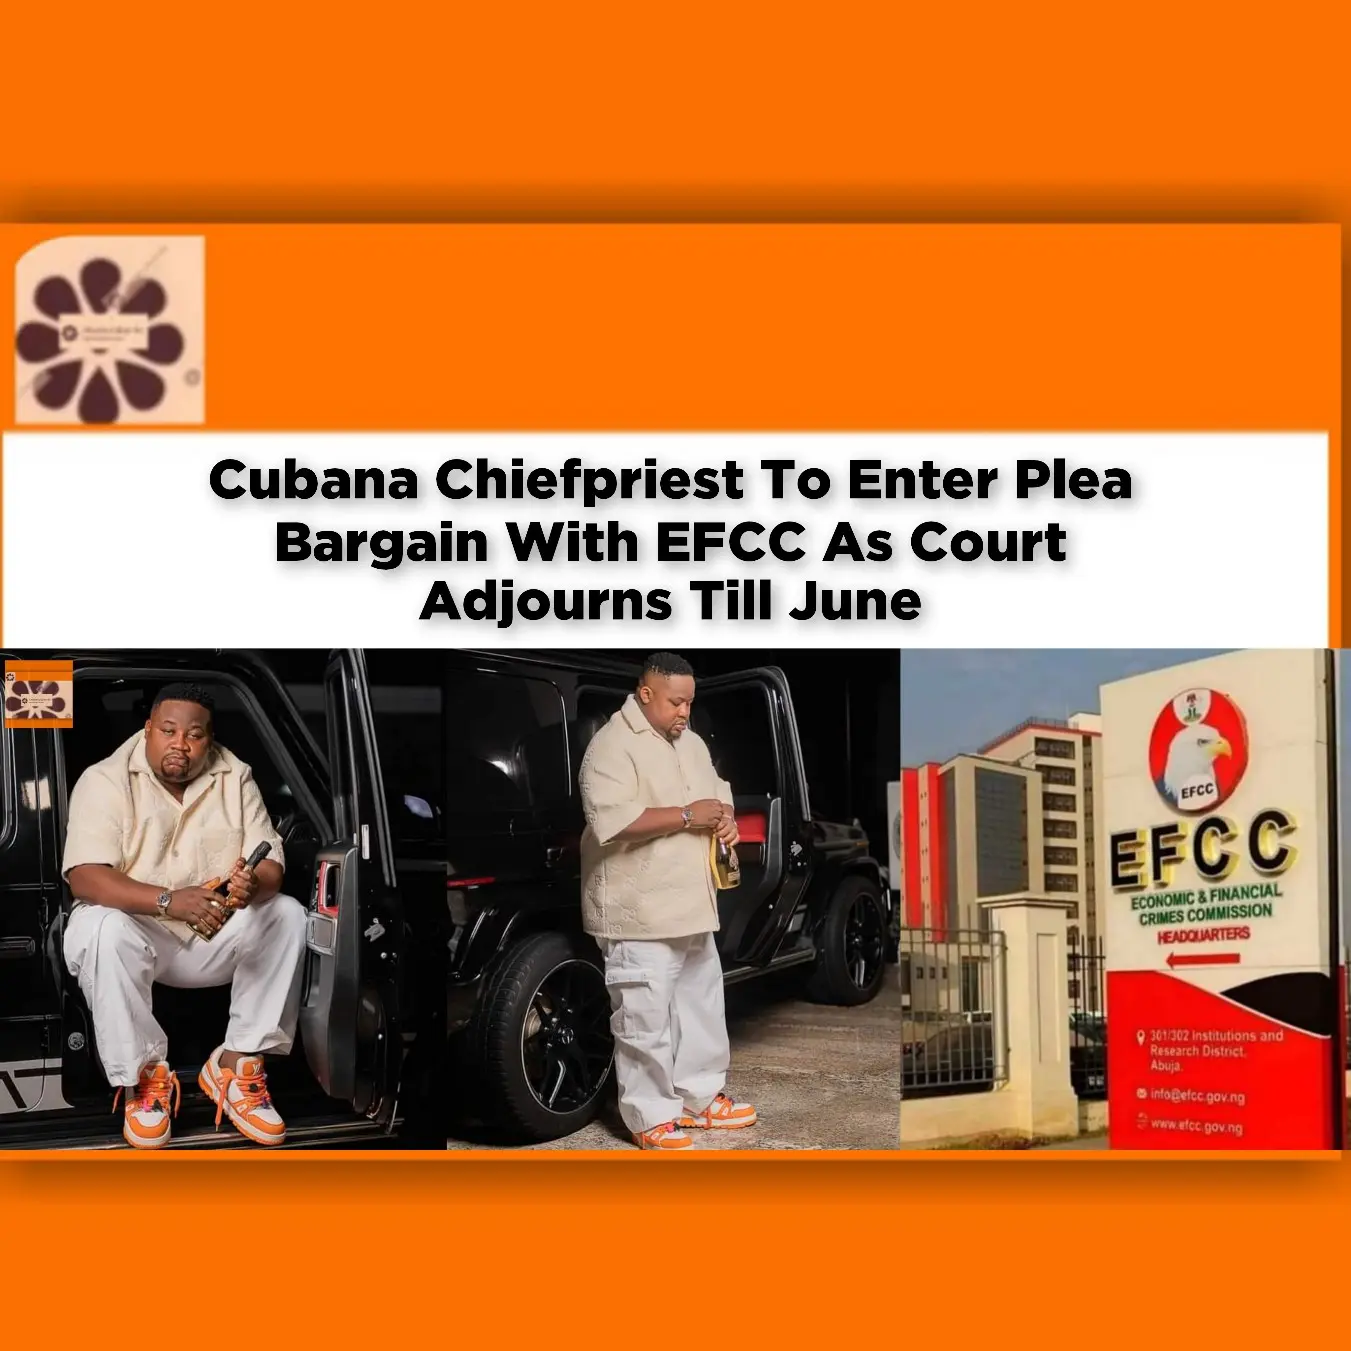 Cubana Chiefpriest To Enter Plea Bargain With EFCC As Court Adjourns Till June ~ OsazuwaAkonedo #Abubakar